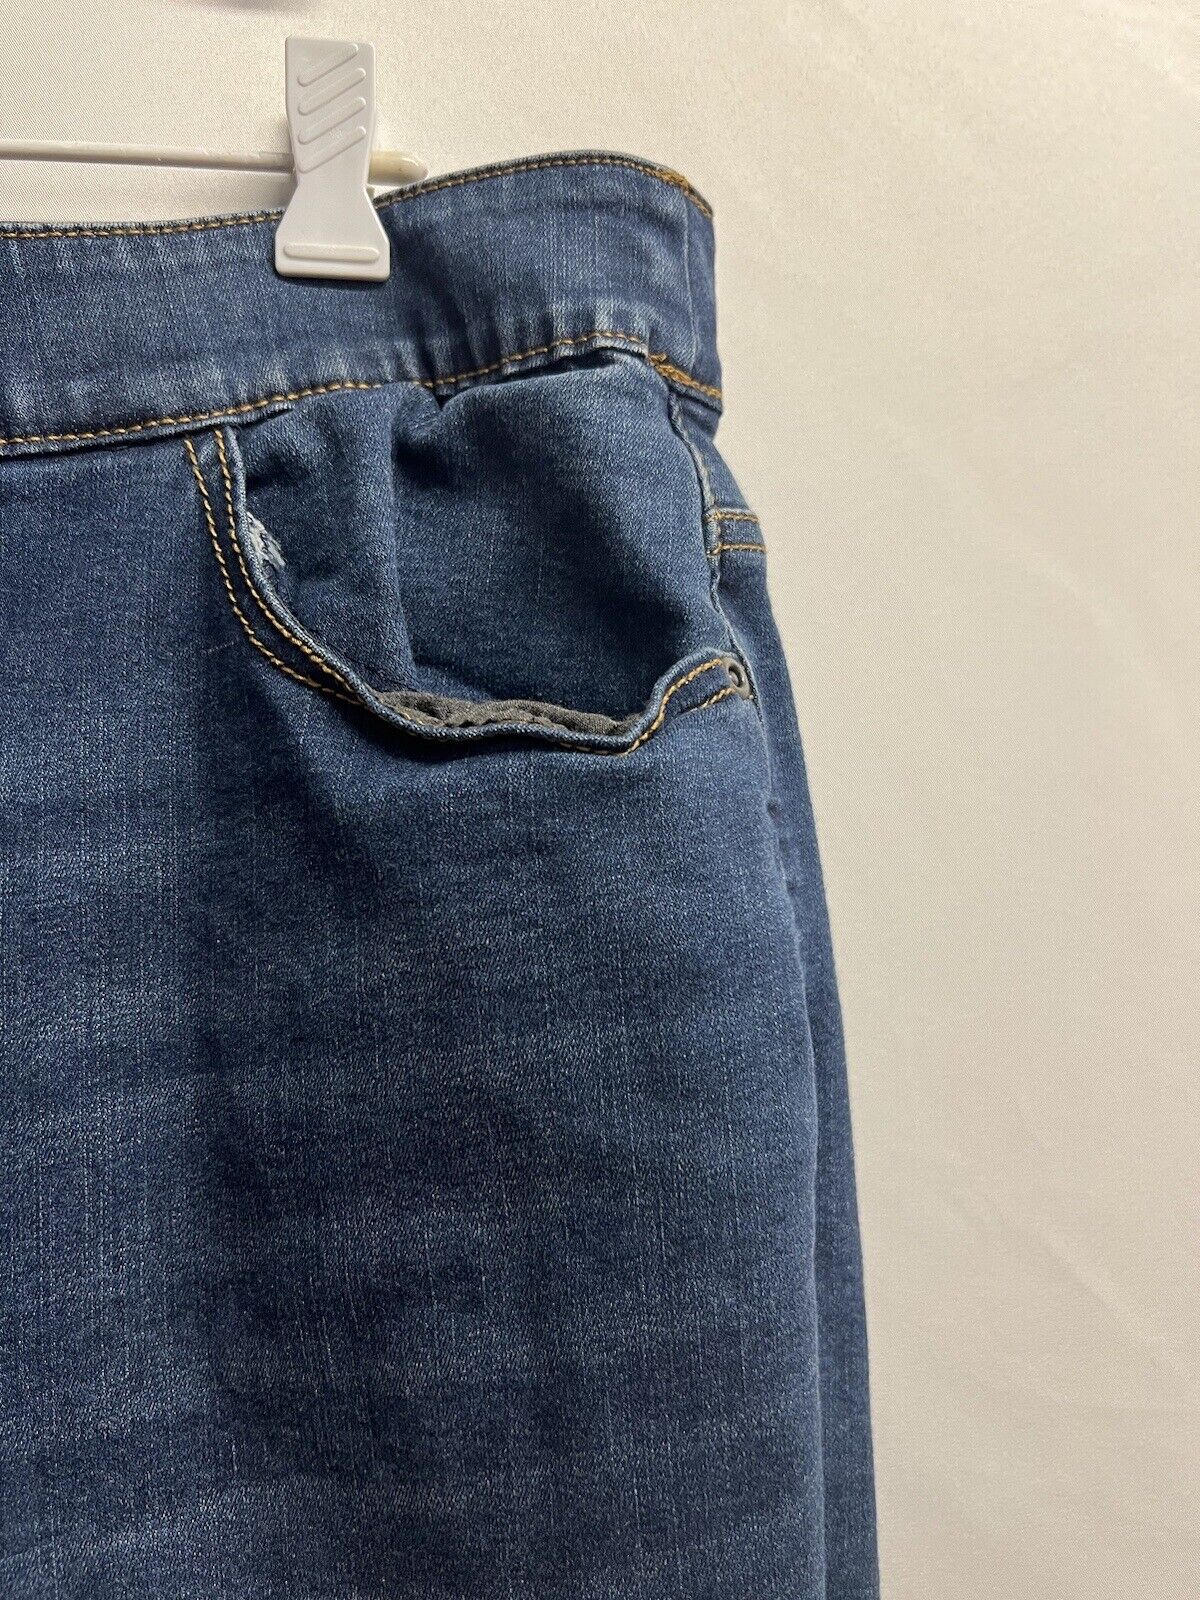 Croft & Barrow Women's Jeans Pull On Blue Size 18P Stretch EUC | eBay